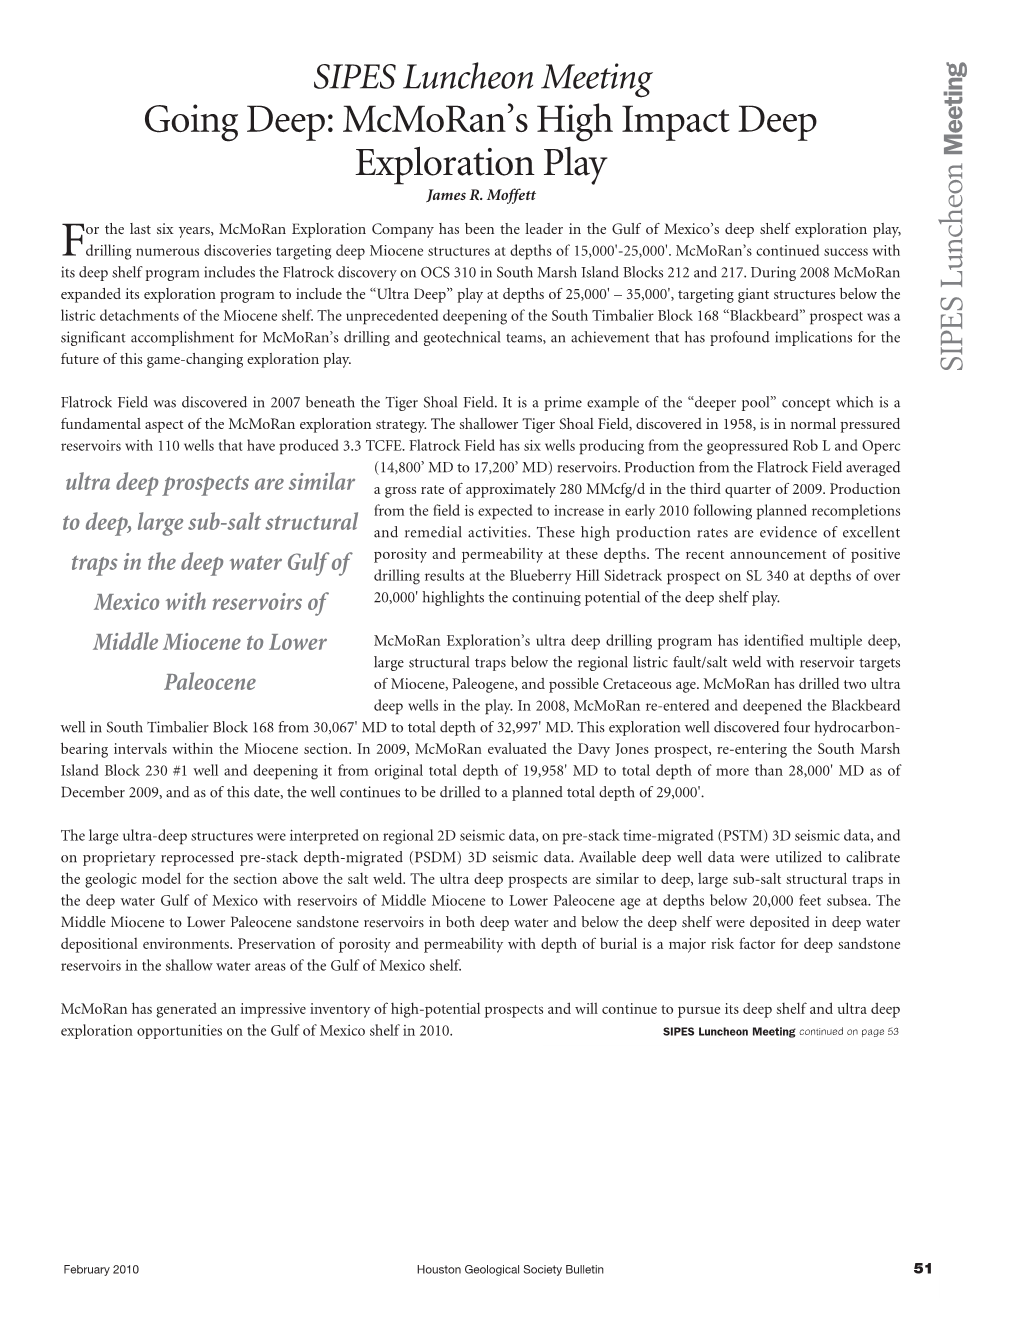 Mcmoran's High Impact Deep Exploration Play